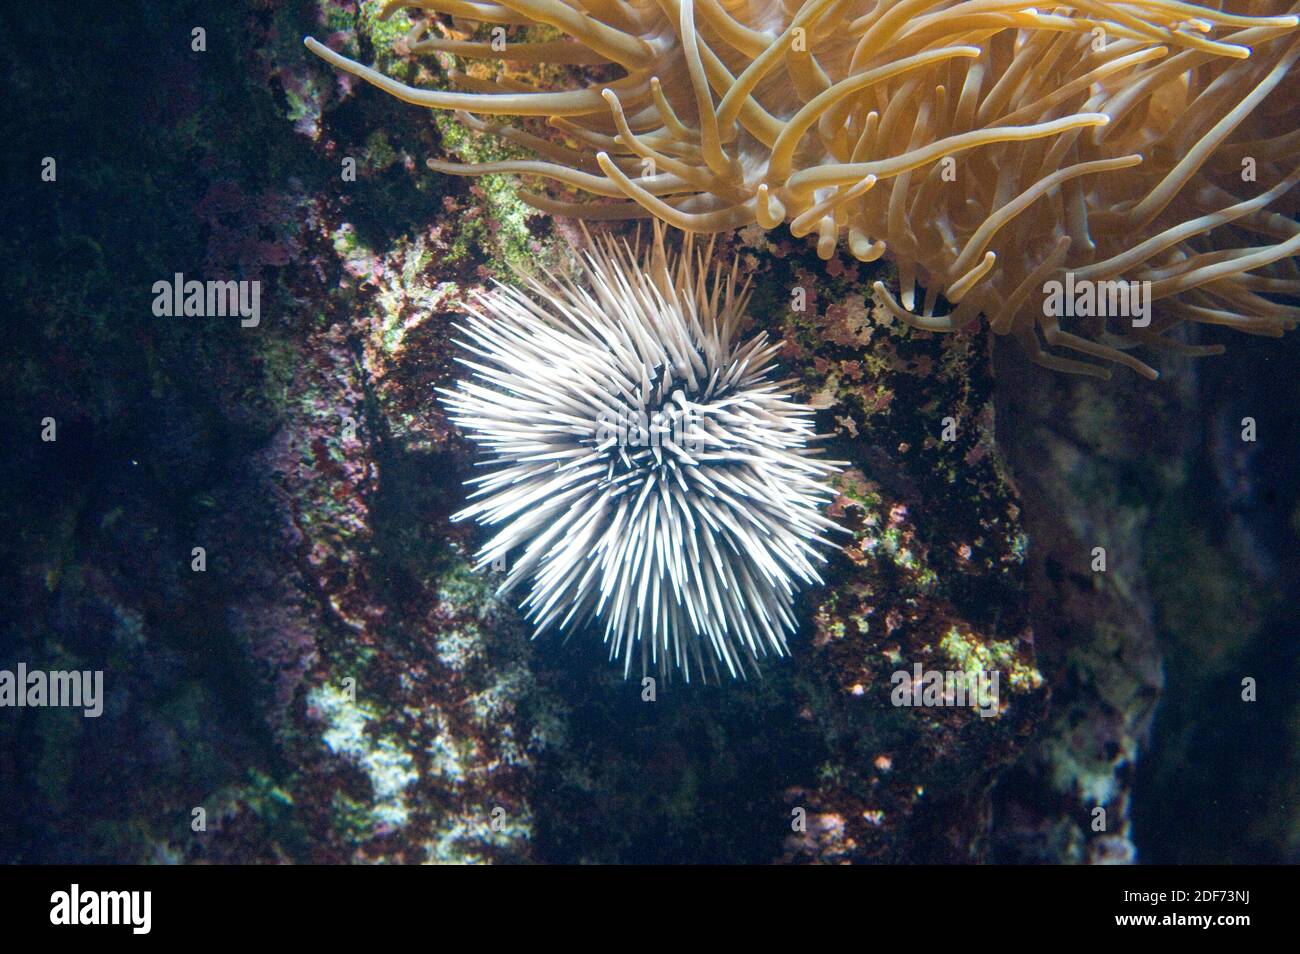 Burrowing urchin (Echinometra mathaei) is a sea urchin native to Indo-Pacific region. Stock Photo